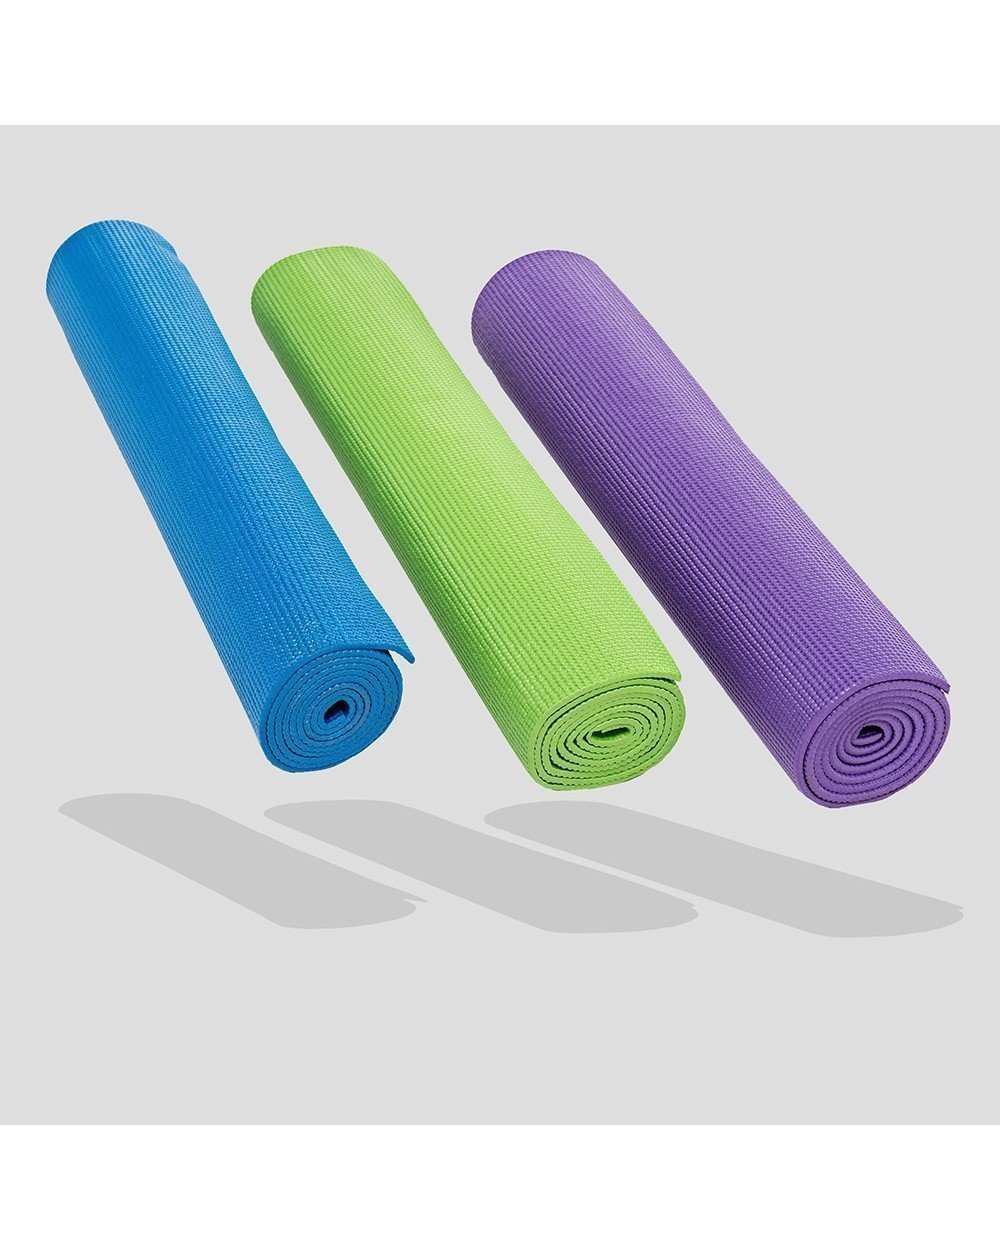 Colchoneta Yoga PVC - 1730x610x6 mm - Verde